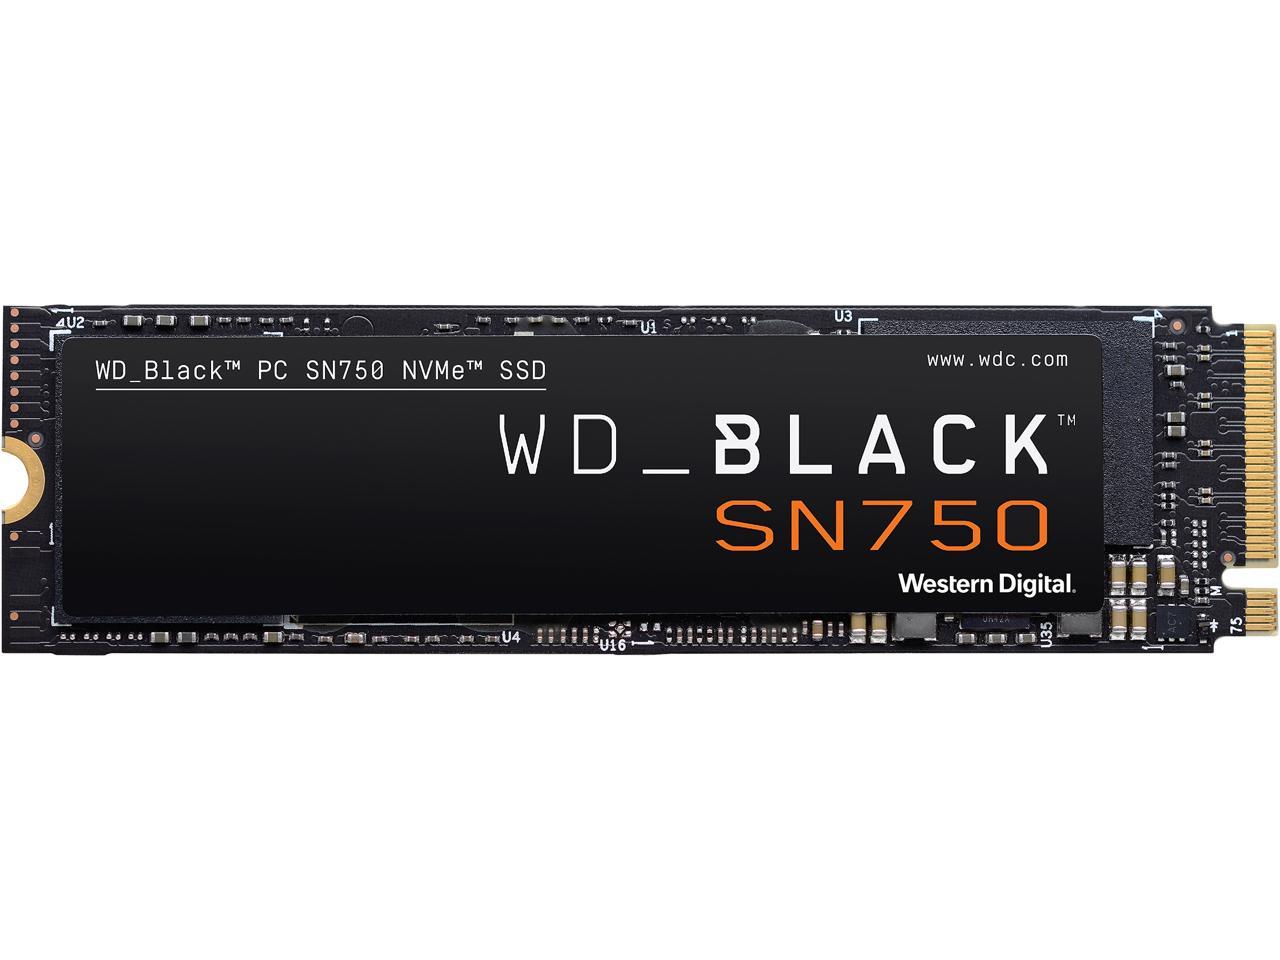 Western Digital WD BLACK SN750 NVMe M.2 2280 1TB SSD - Newegg.com